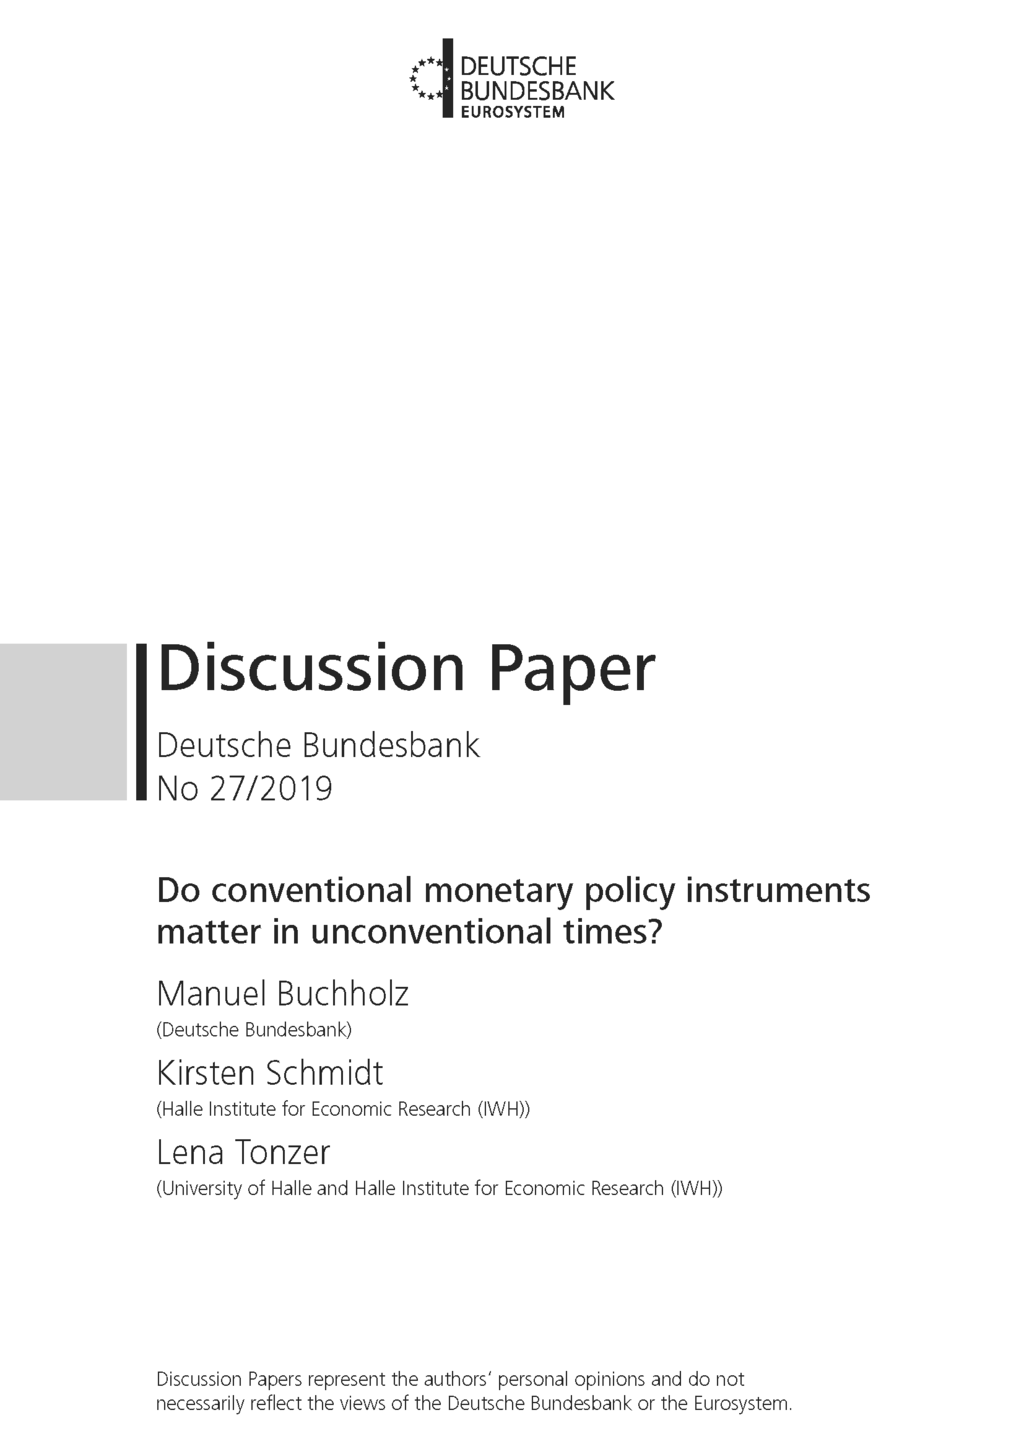 cover_Deutsche-Bundesbank-Discussion-Paper_2019-27.png